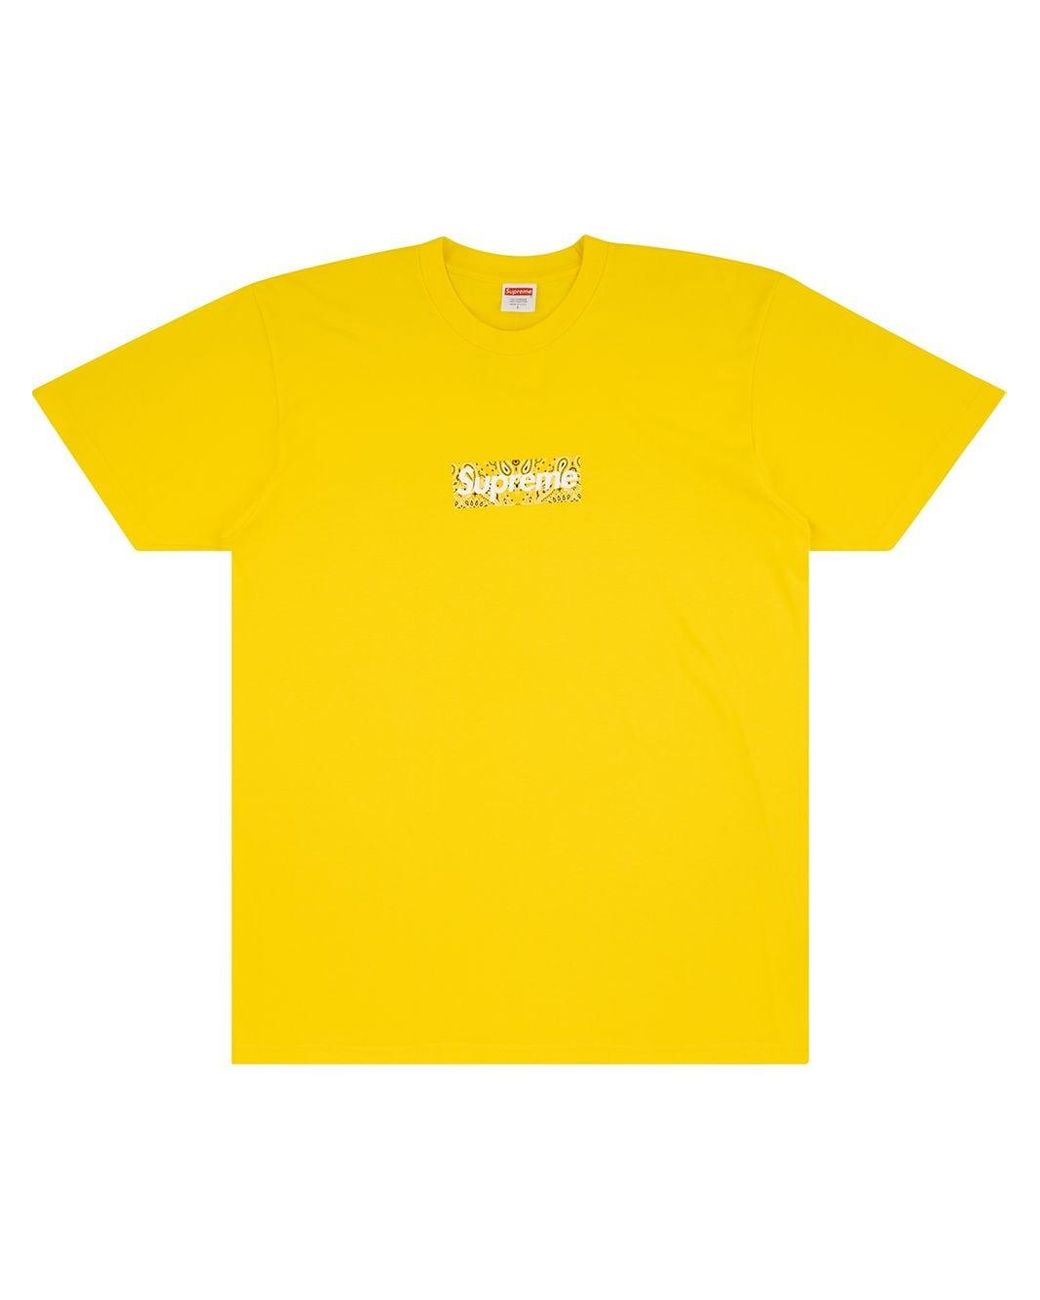 Supreme Cotton Bandana Box Logo T-shirt in Yellow for Men - Lyst